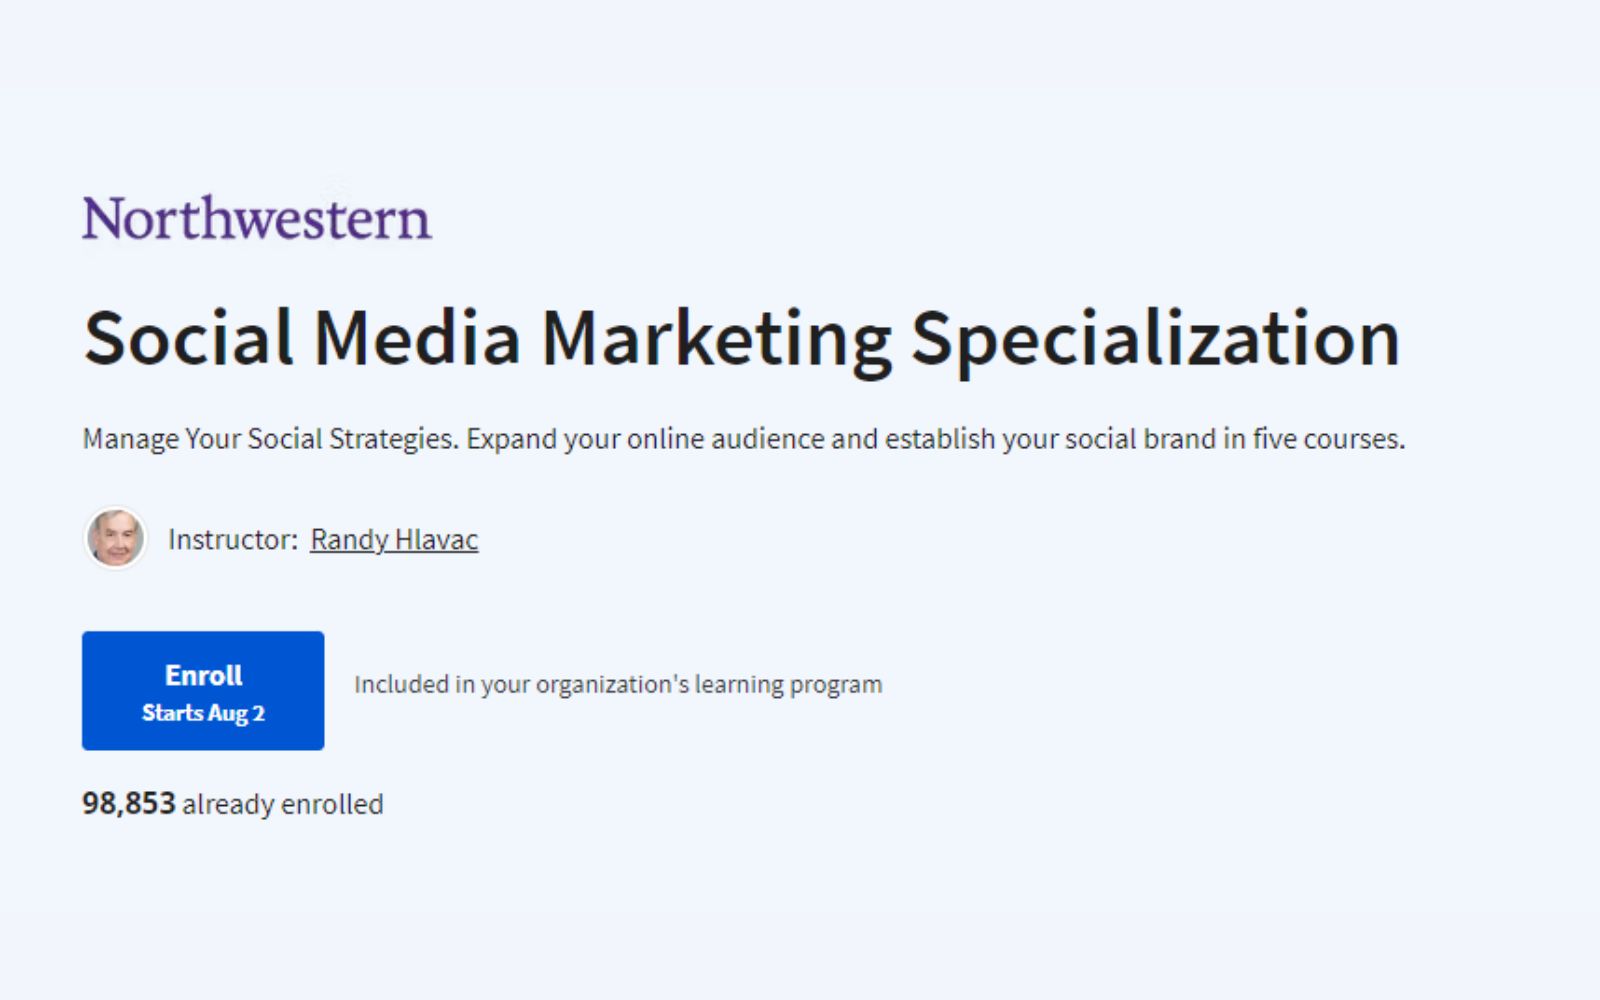 Social Media Marketing Specialization by Coursera